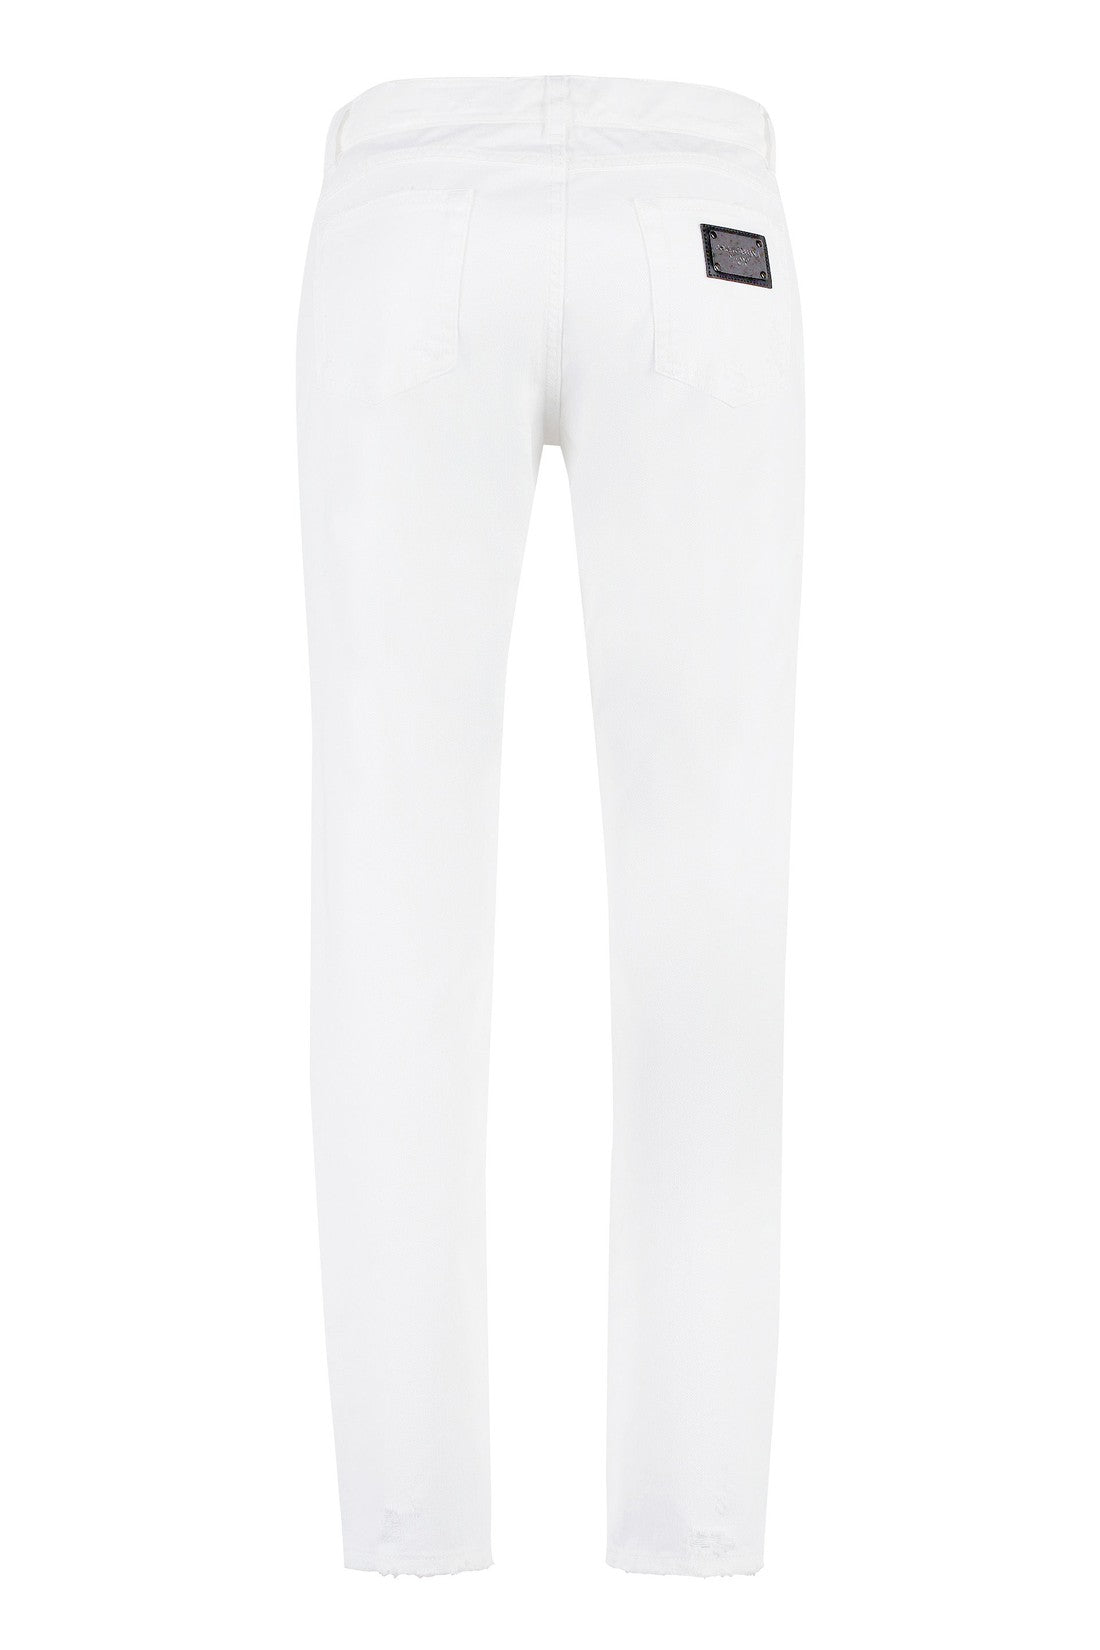 Dolce & Gabbana-OUTLET-SALE-Regular fit jeans-ARCHIVIST